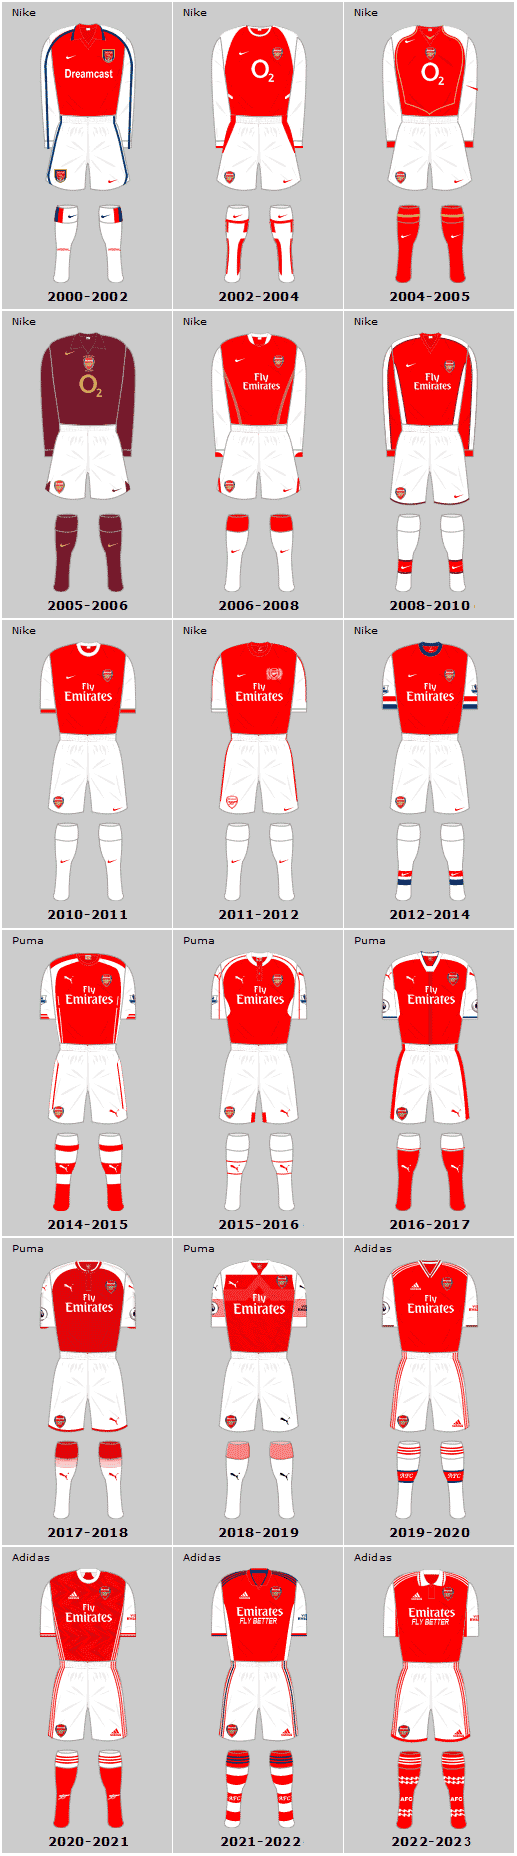 Arsenal FC 21st Century Home Kits